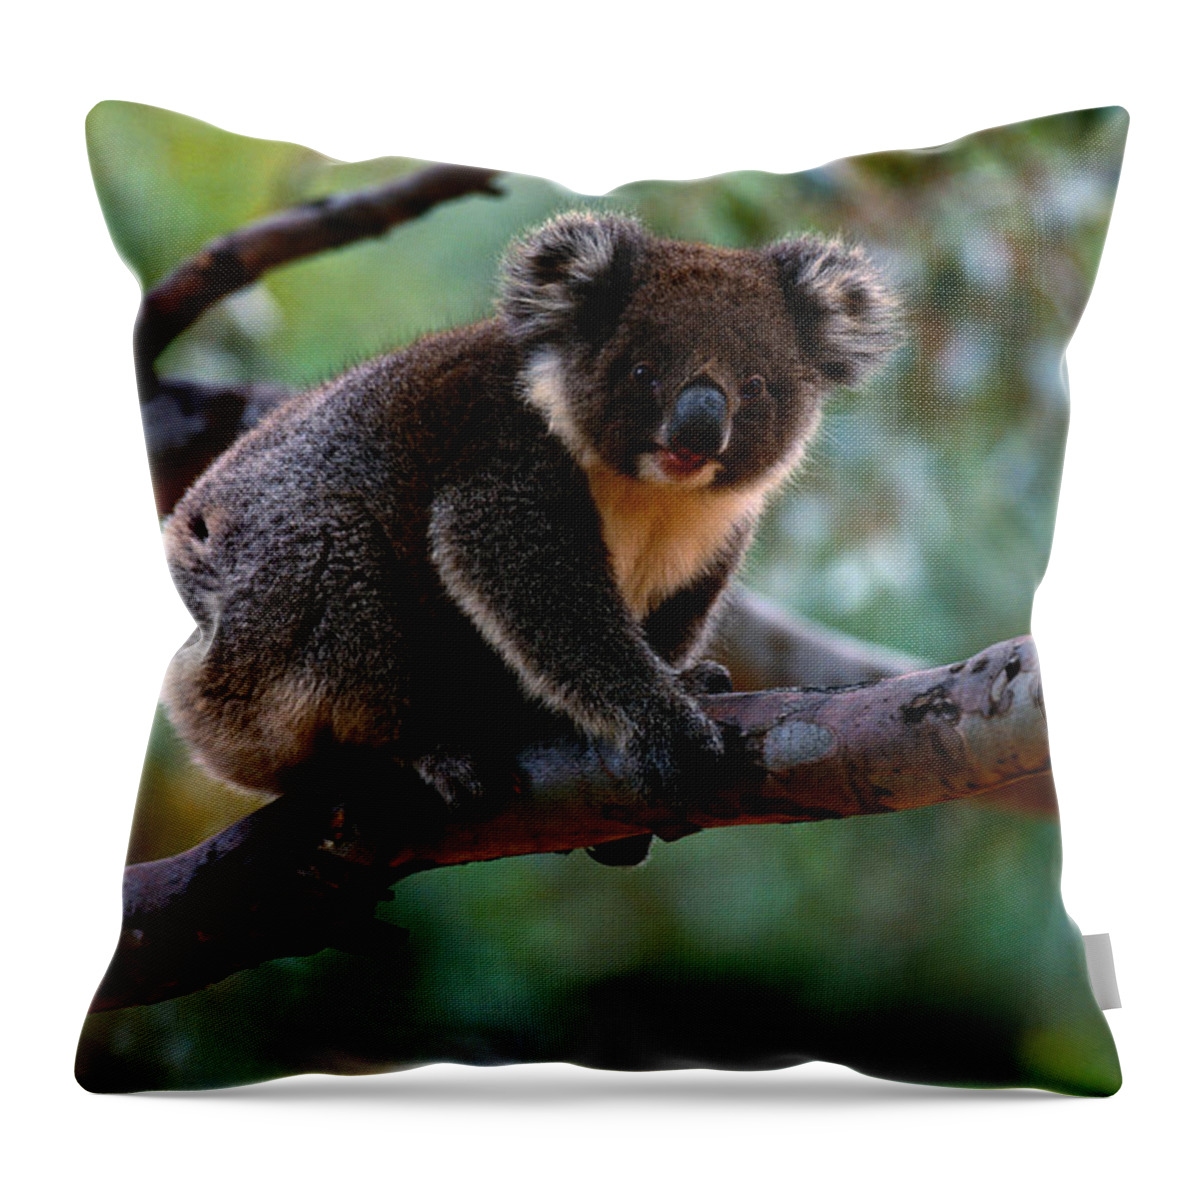 Oceania Throw Pillow featuring the photograph Koala Phascolarctos Cinereus On Tree by Art Wolfe